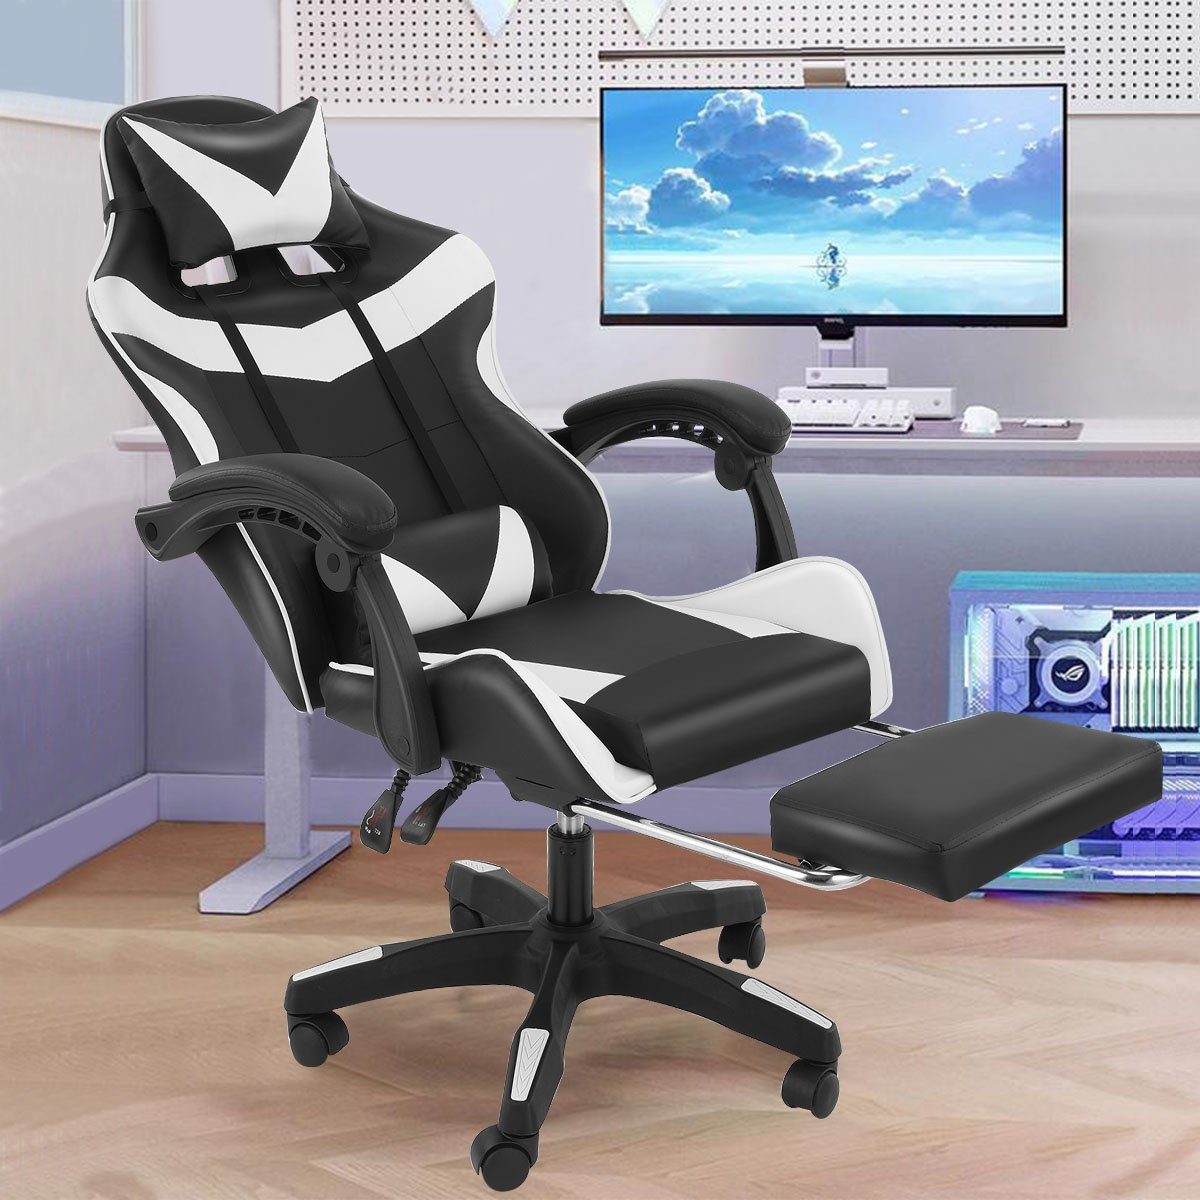 AUFUN Gaming Stuhl, Bürostuhl Ergonomisch mit Vibration Massage Lendenkissen,  Fußstütze, Kopfstütze, Ergonomisch, Massage Gaming Sessel, 150